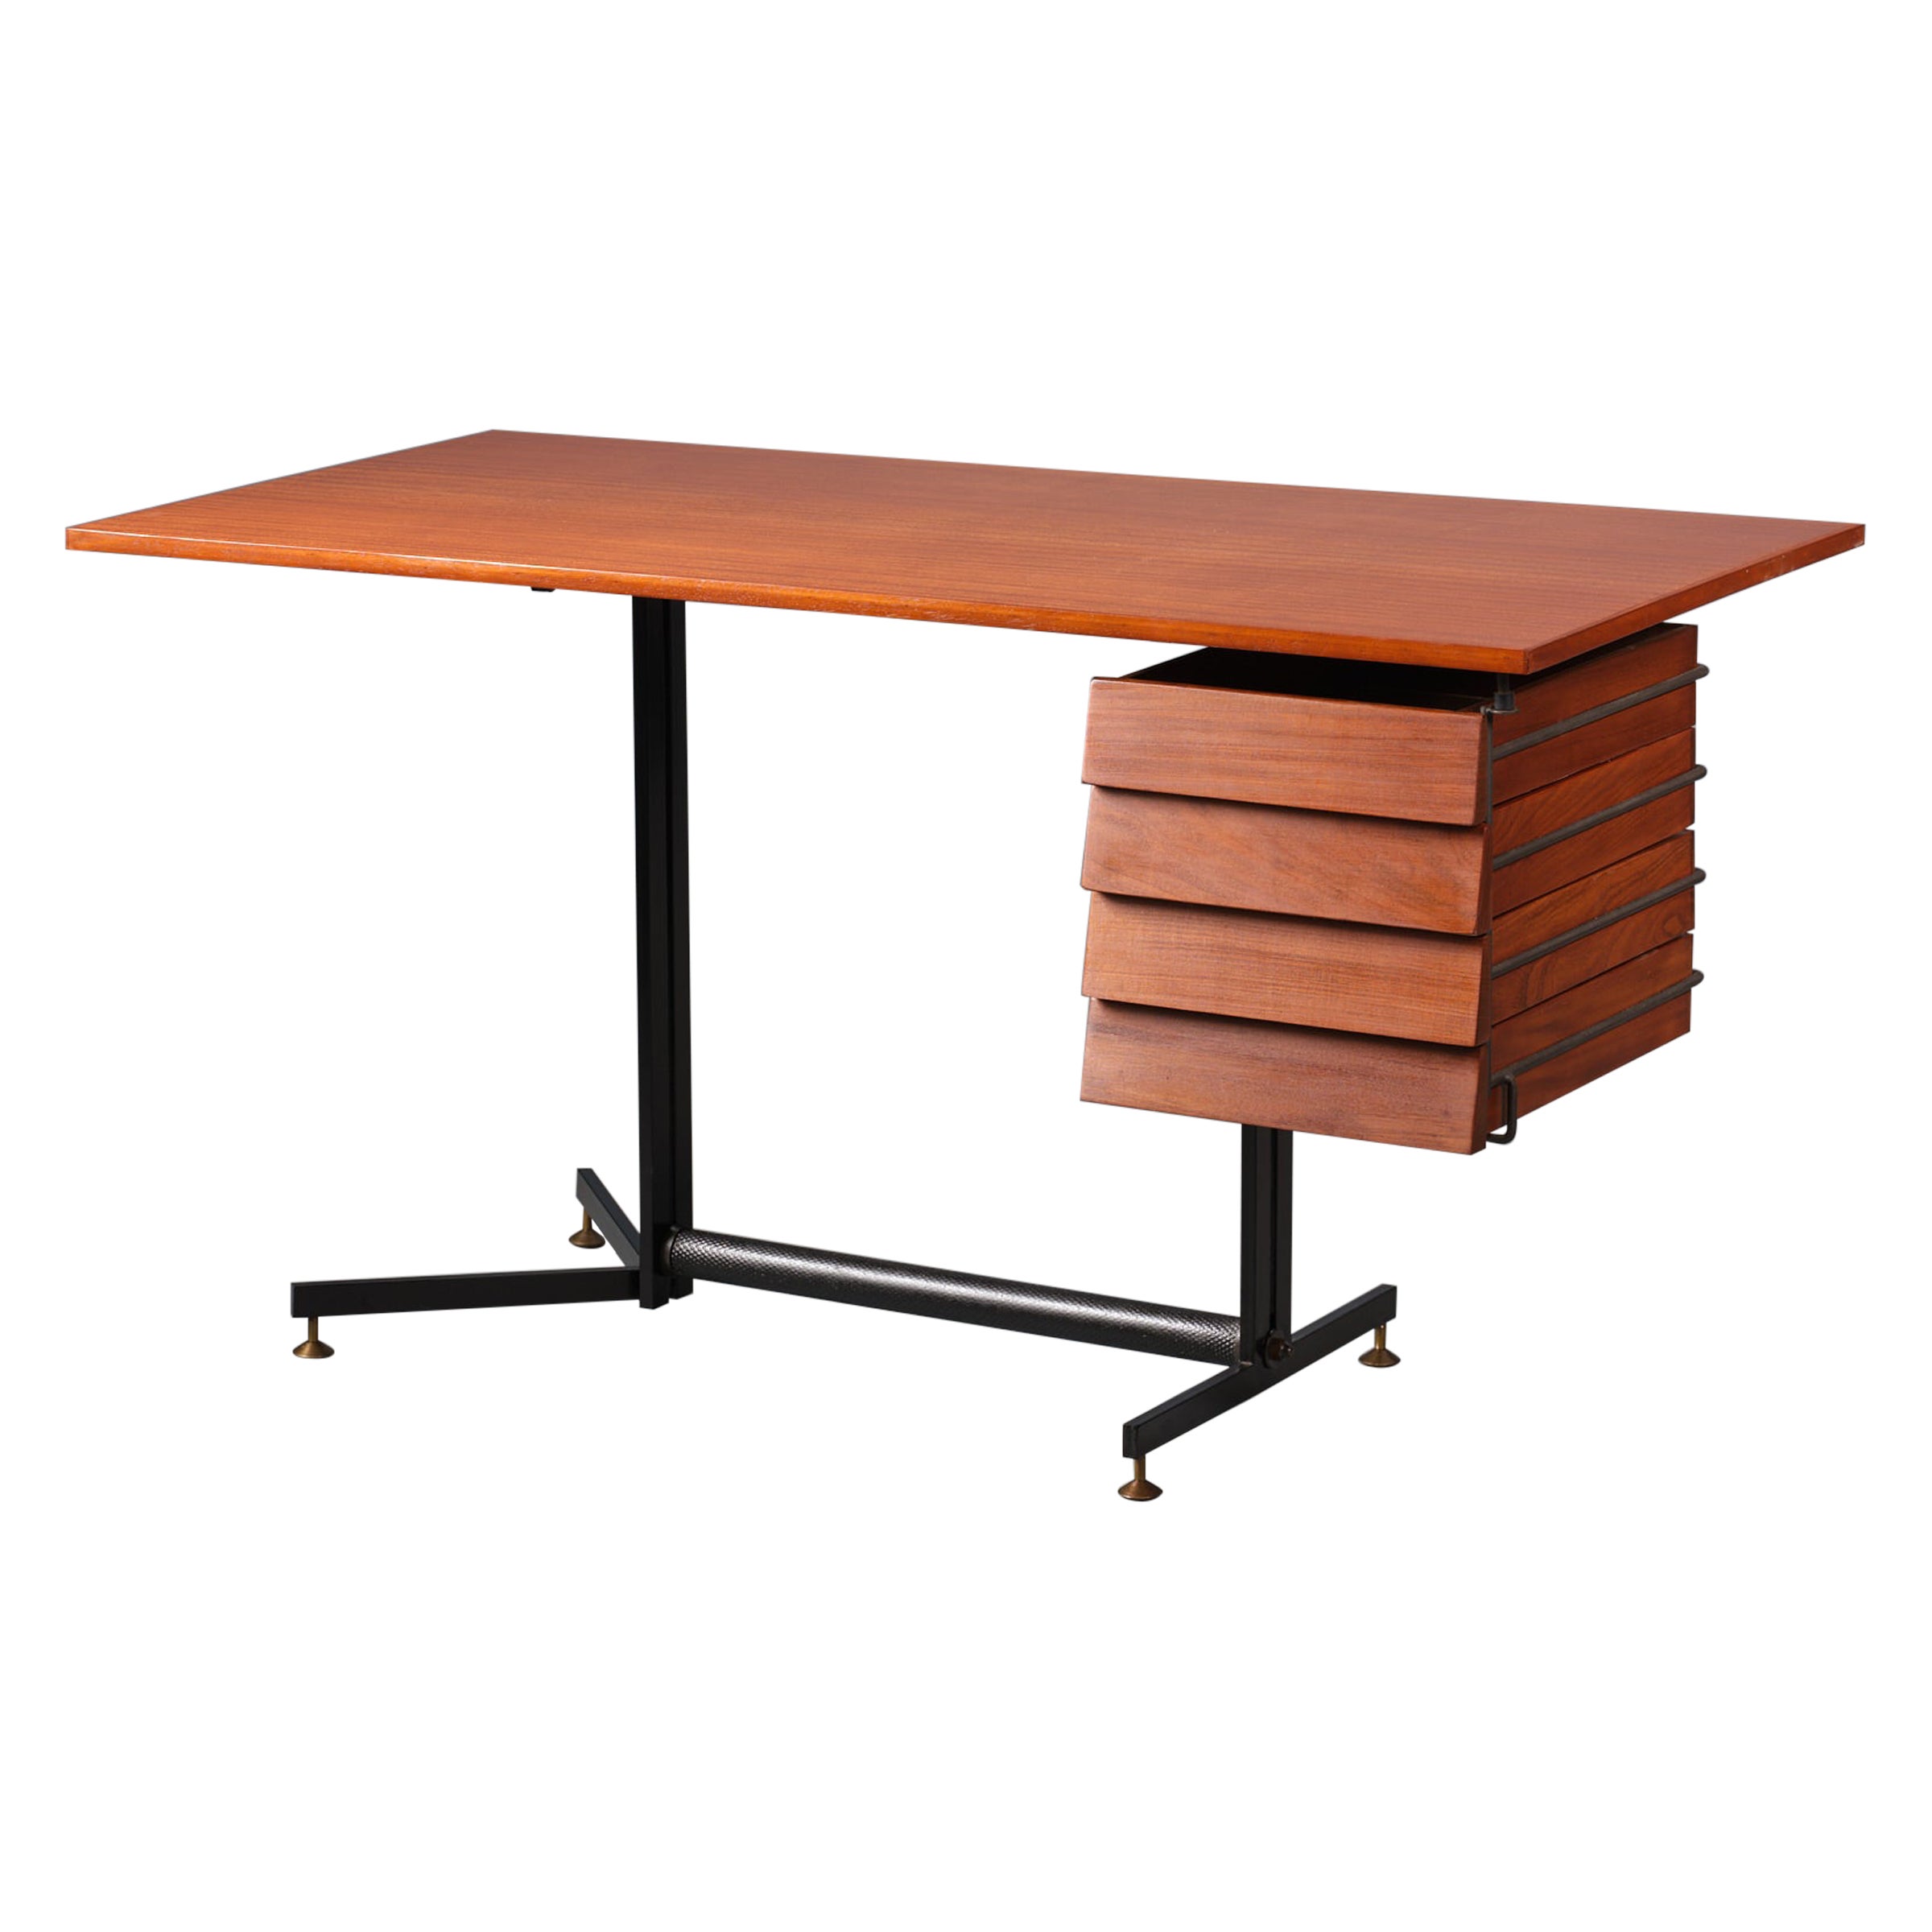 Midcentury Modern Italian Teak Desk: Expertly Restored to Original Beauty  For Sale